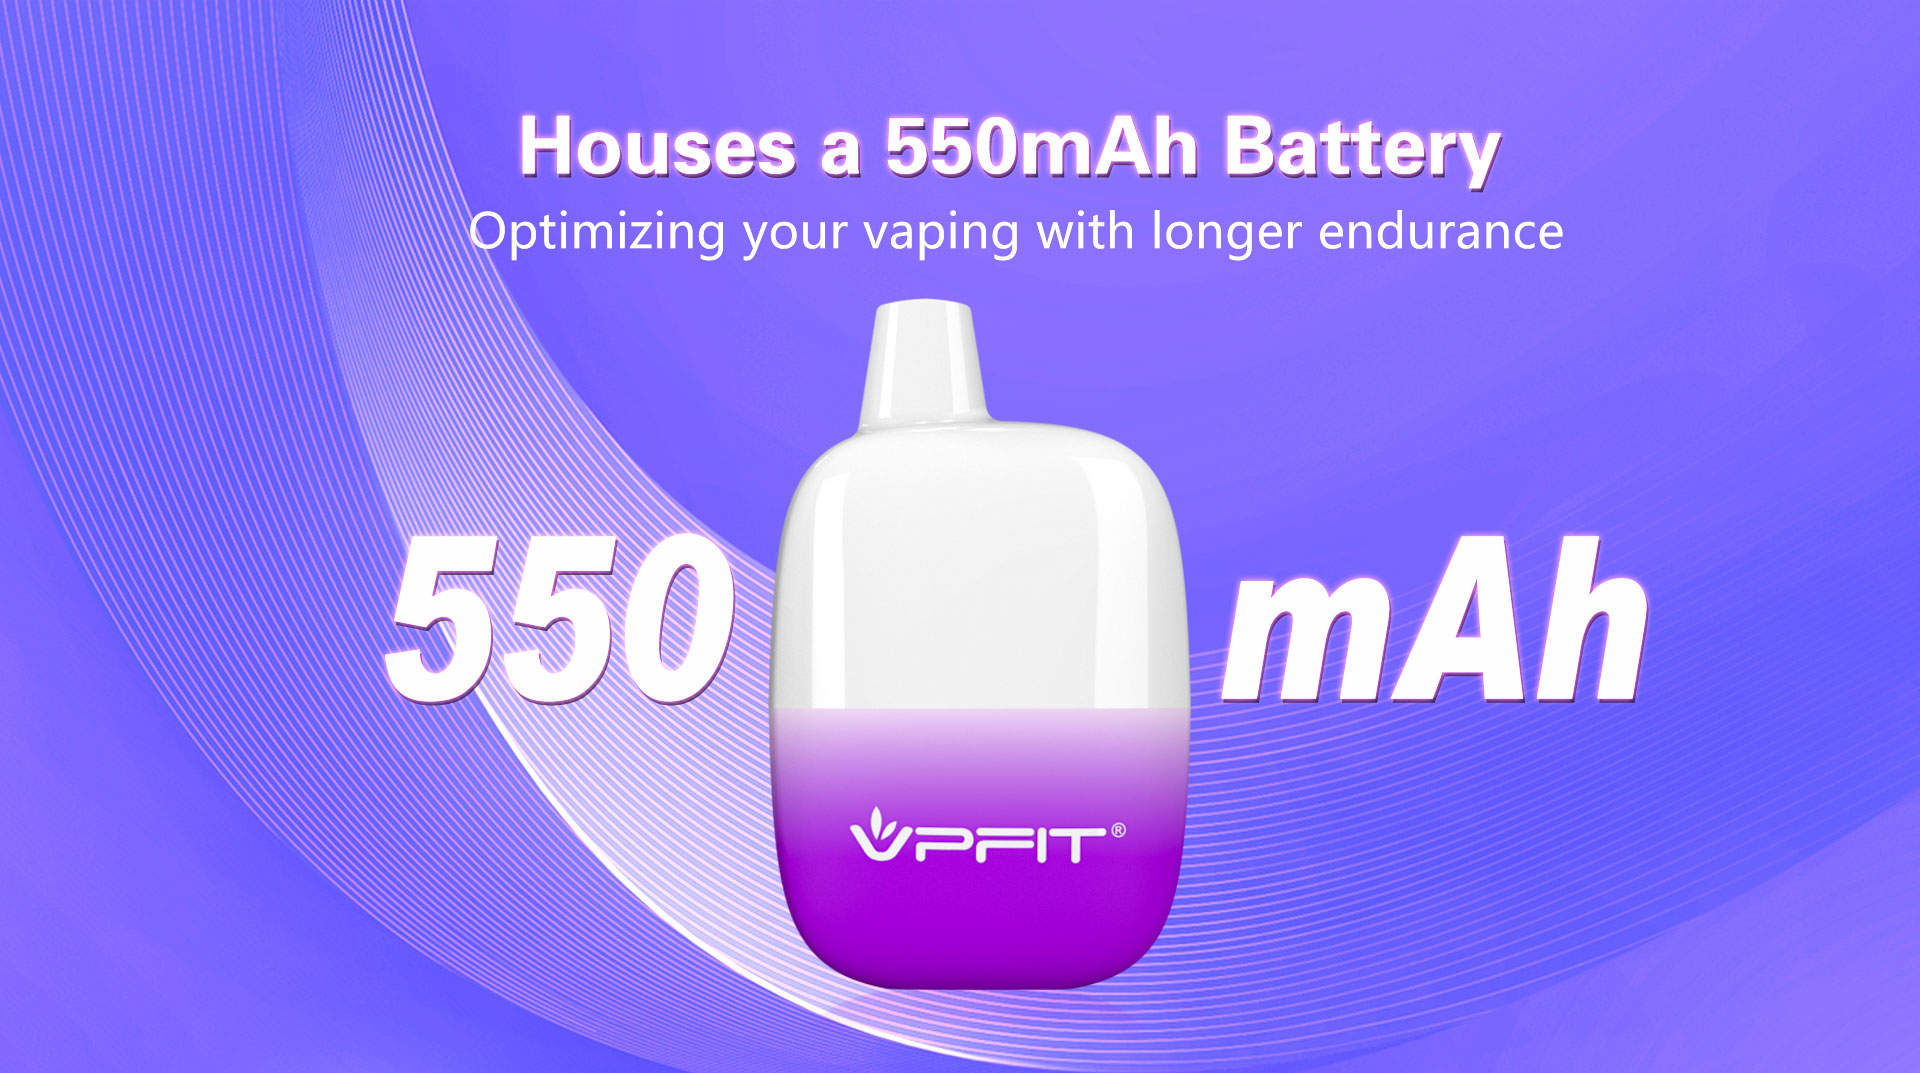 Houses a 550mAh Battery